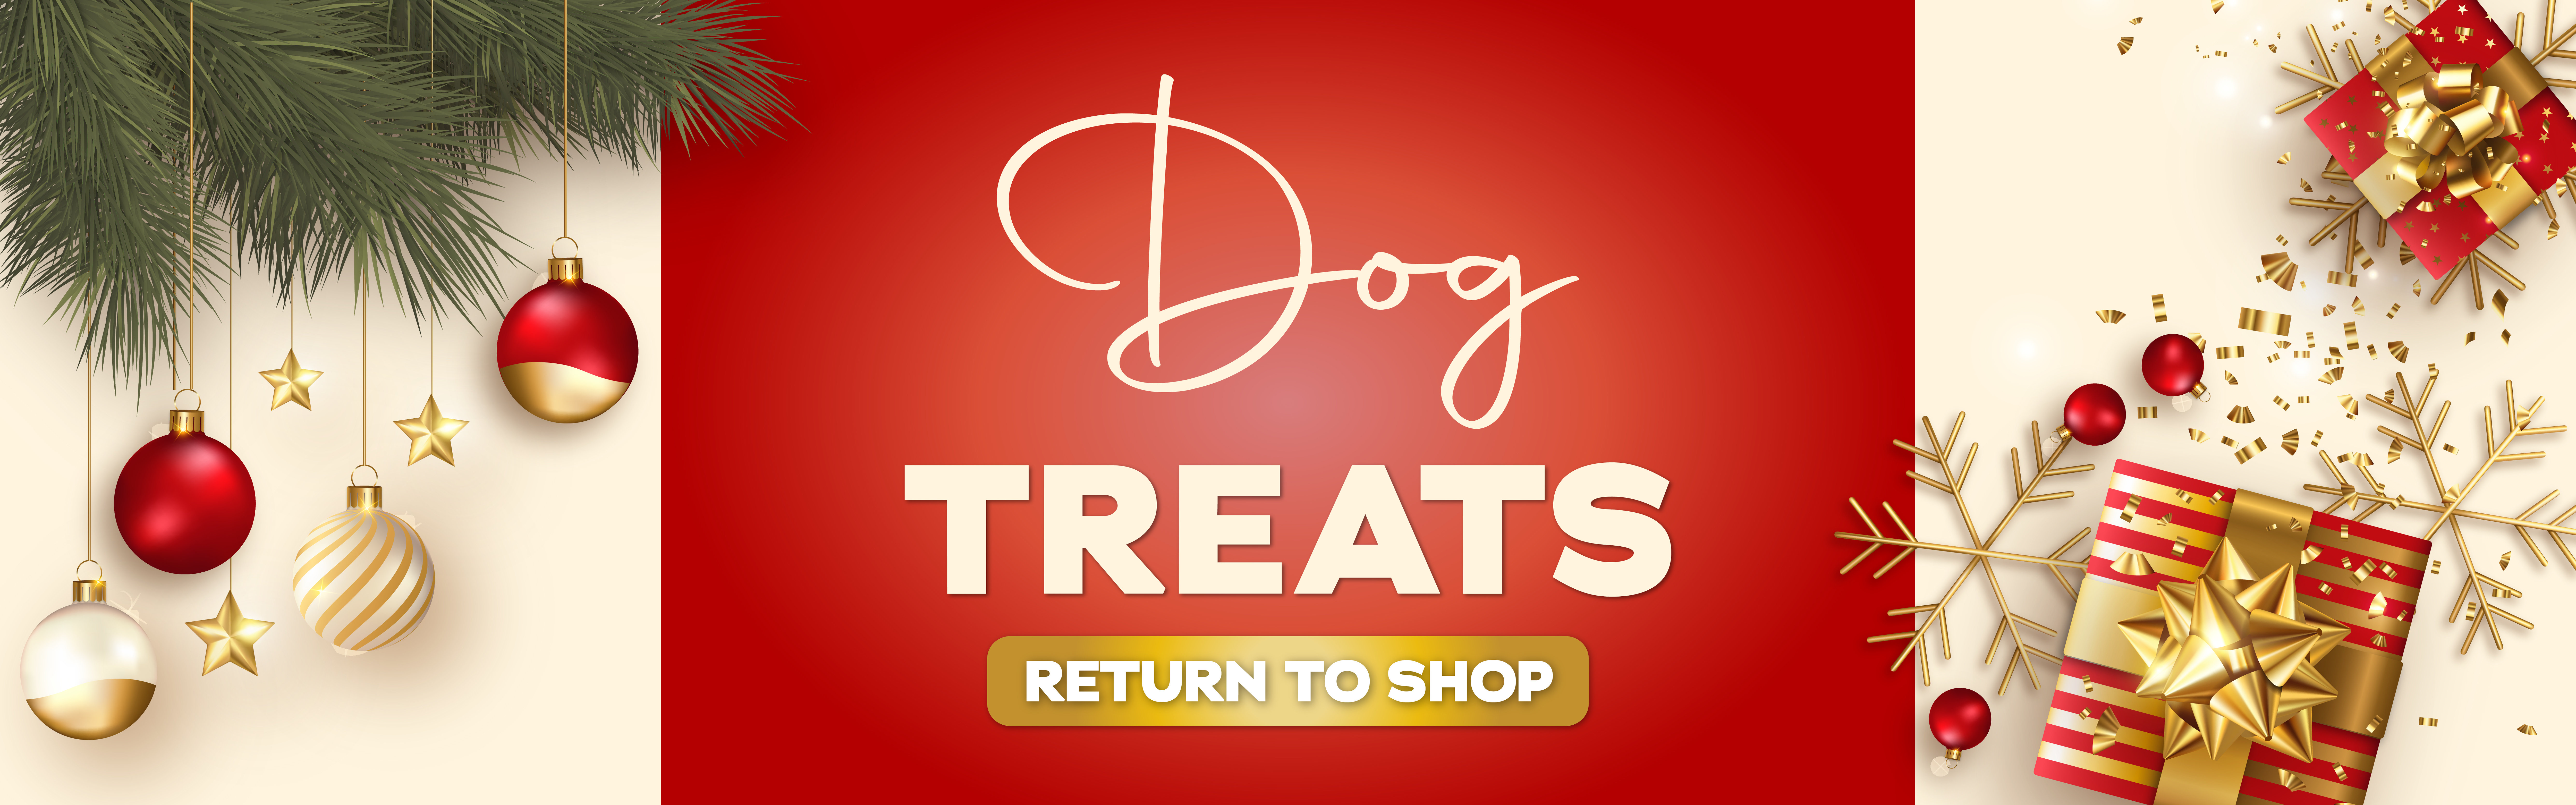 Dog Treats - Return to Shop